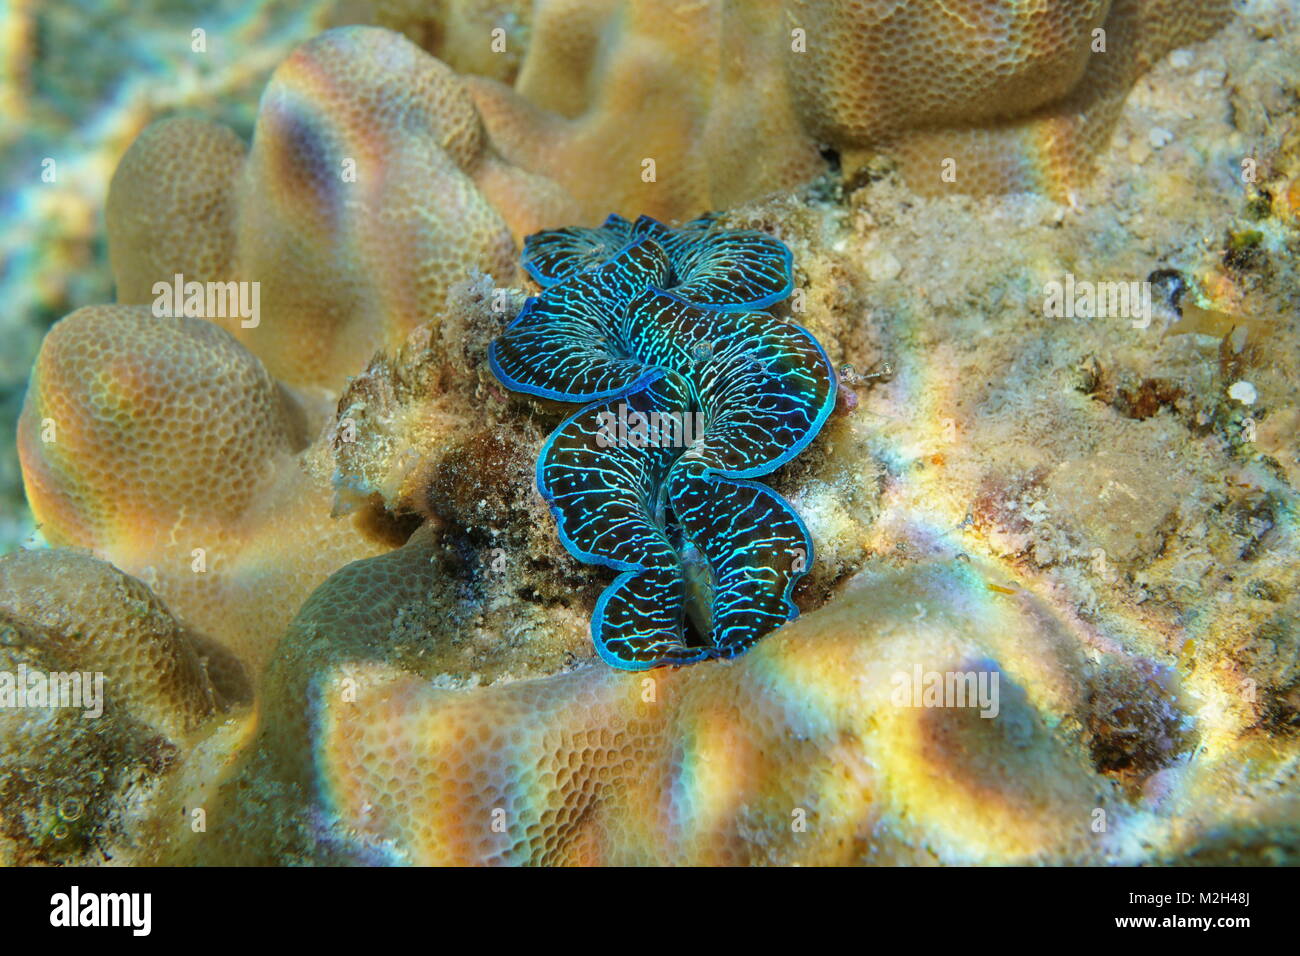 A blue mollusk maxima clam, Tridacna maxima, underwater in the Pacific ocean, Rarotonga, Cook islands Stock Photo